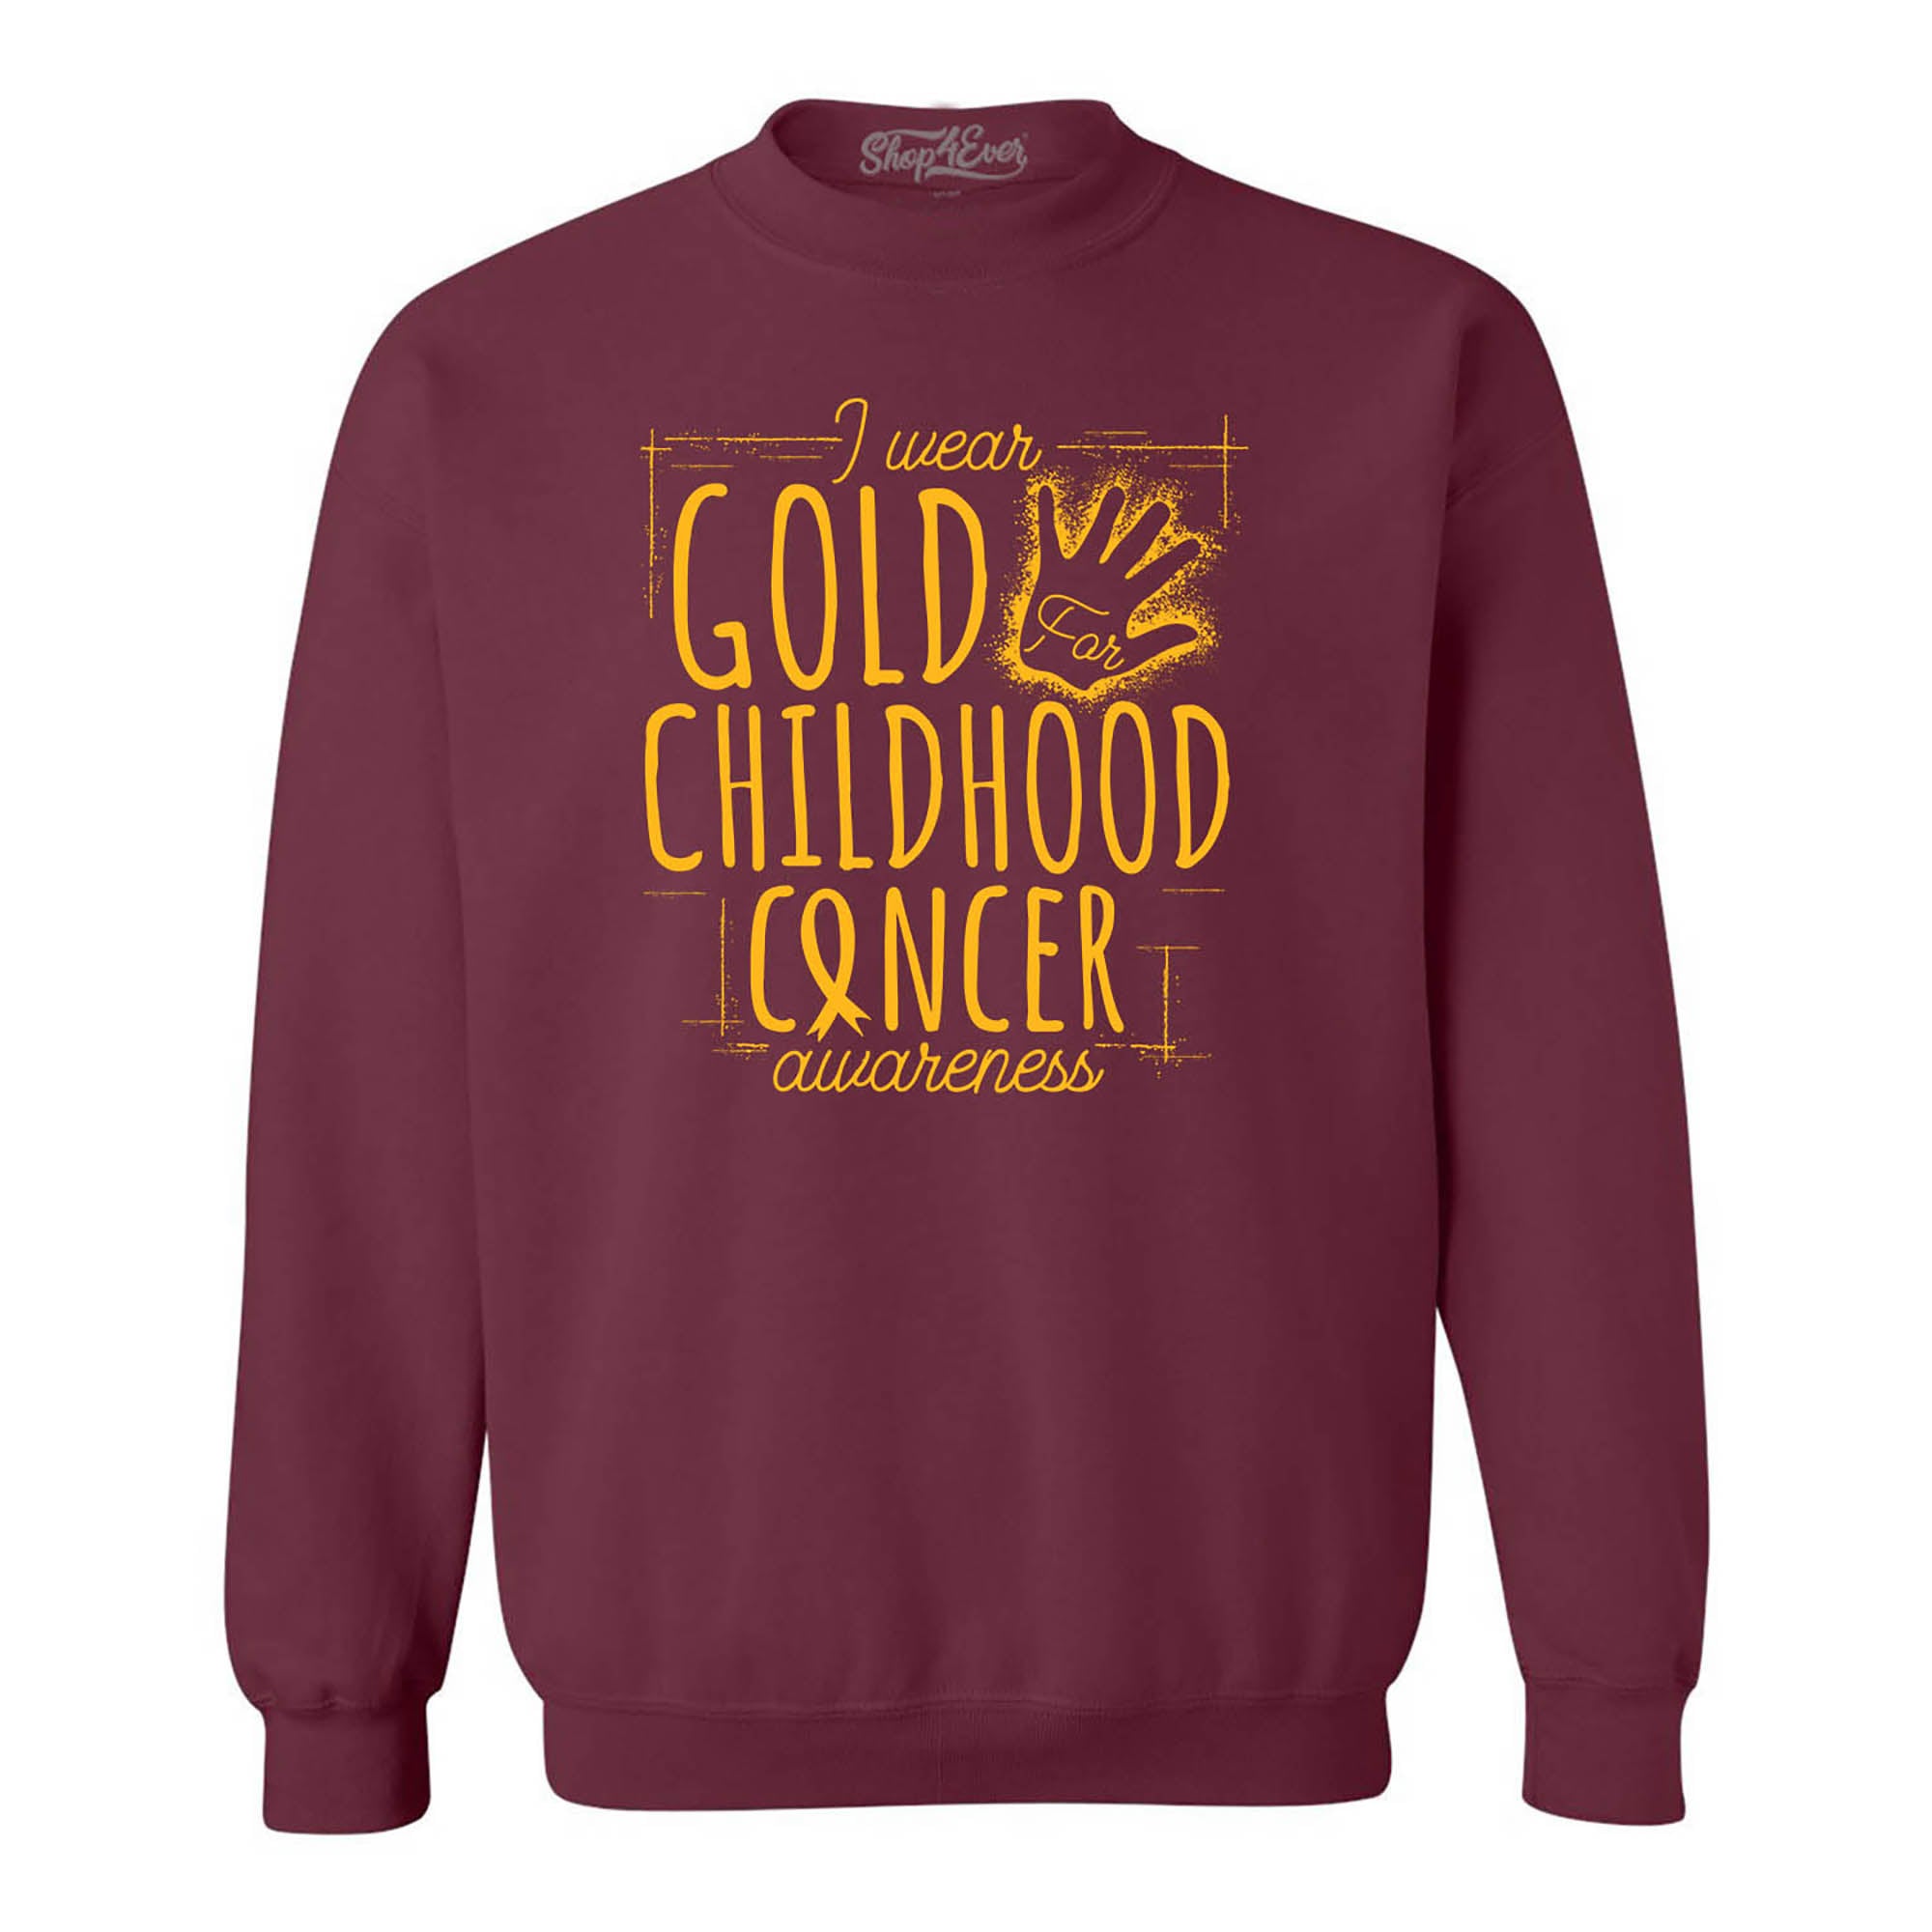 I Wear Gold for Childhood Cancer Awareness Crewneck Sweatshirts